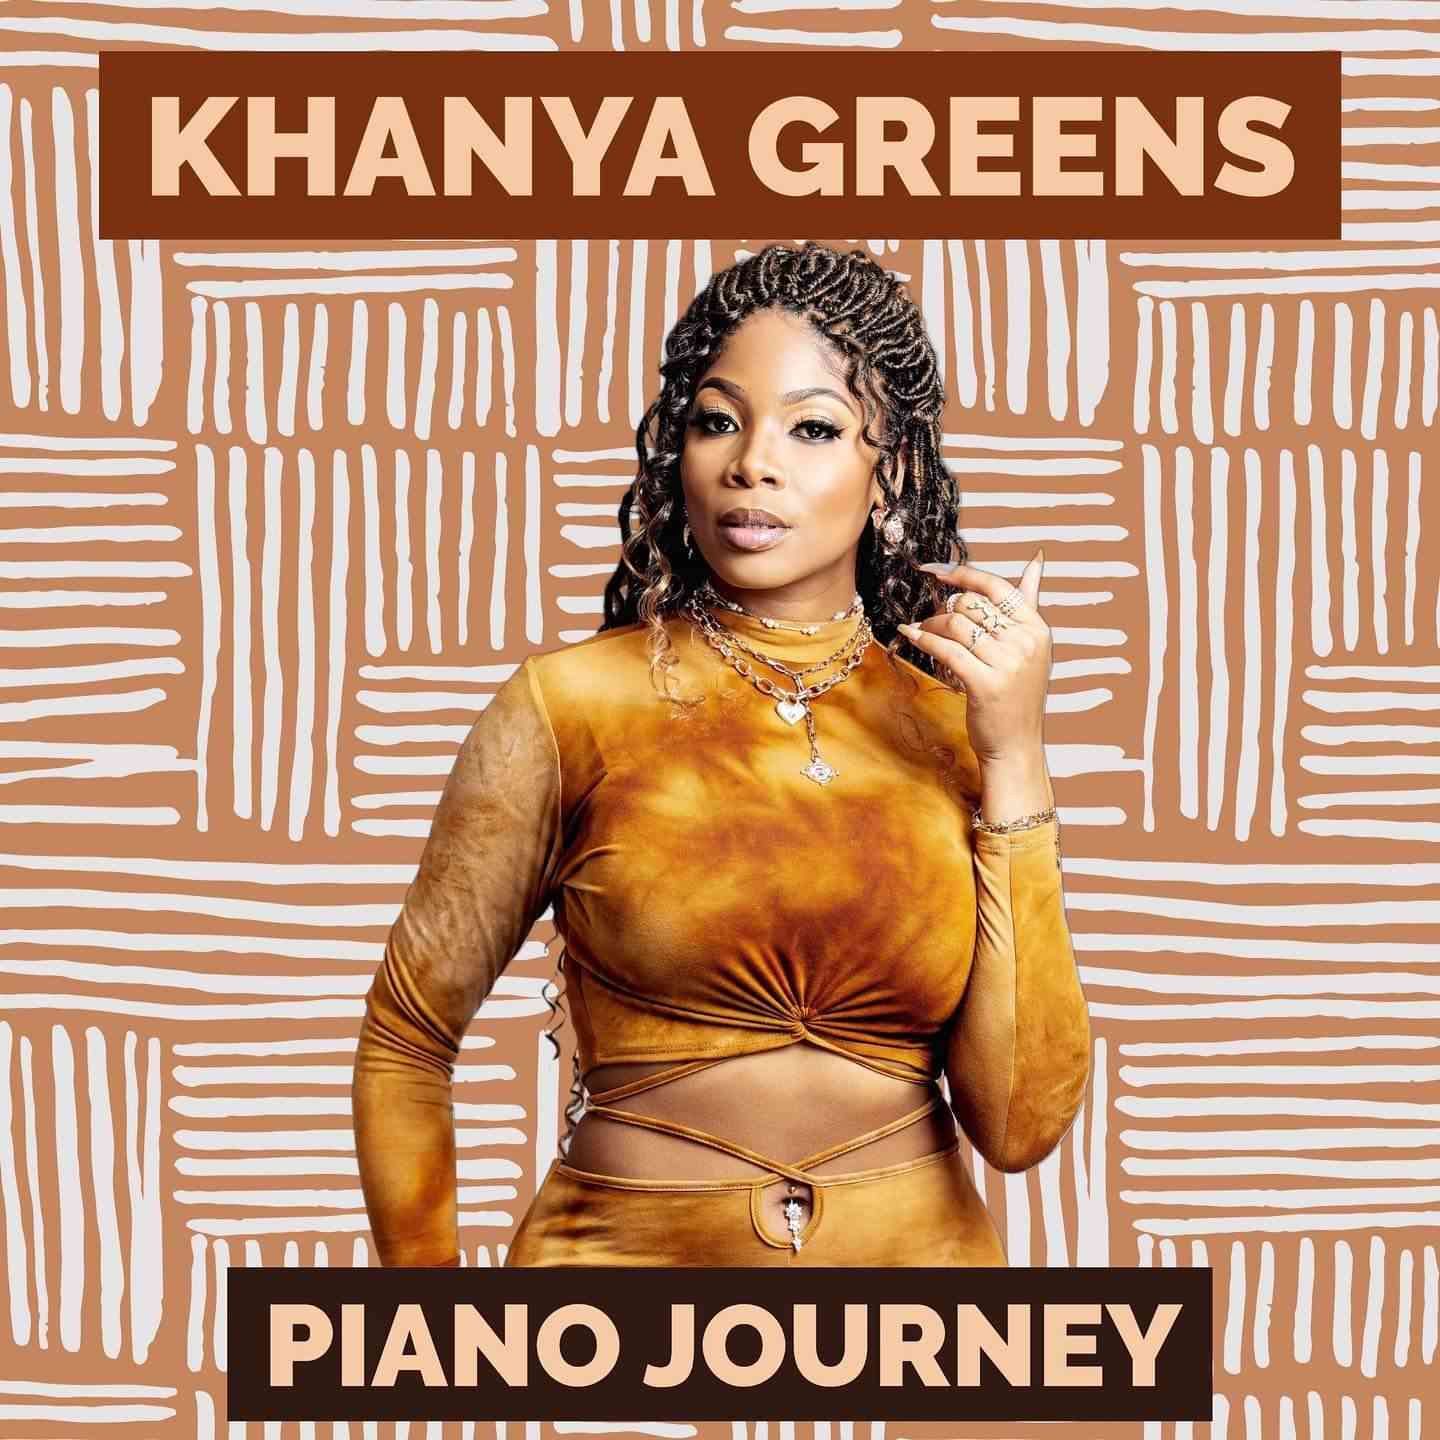 Khanya Greens Unveils Piano Journey Album